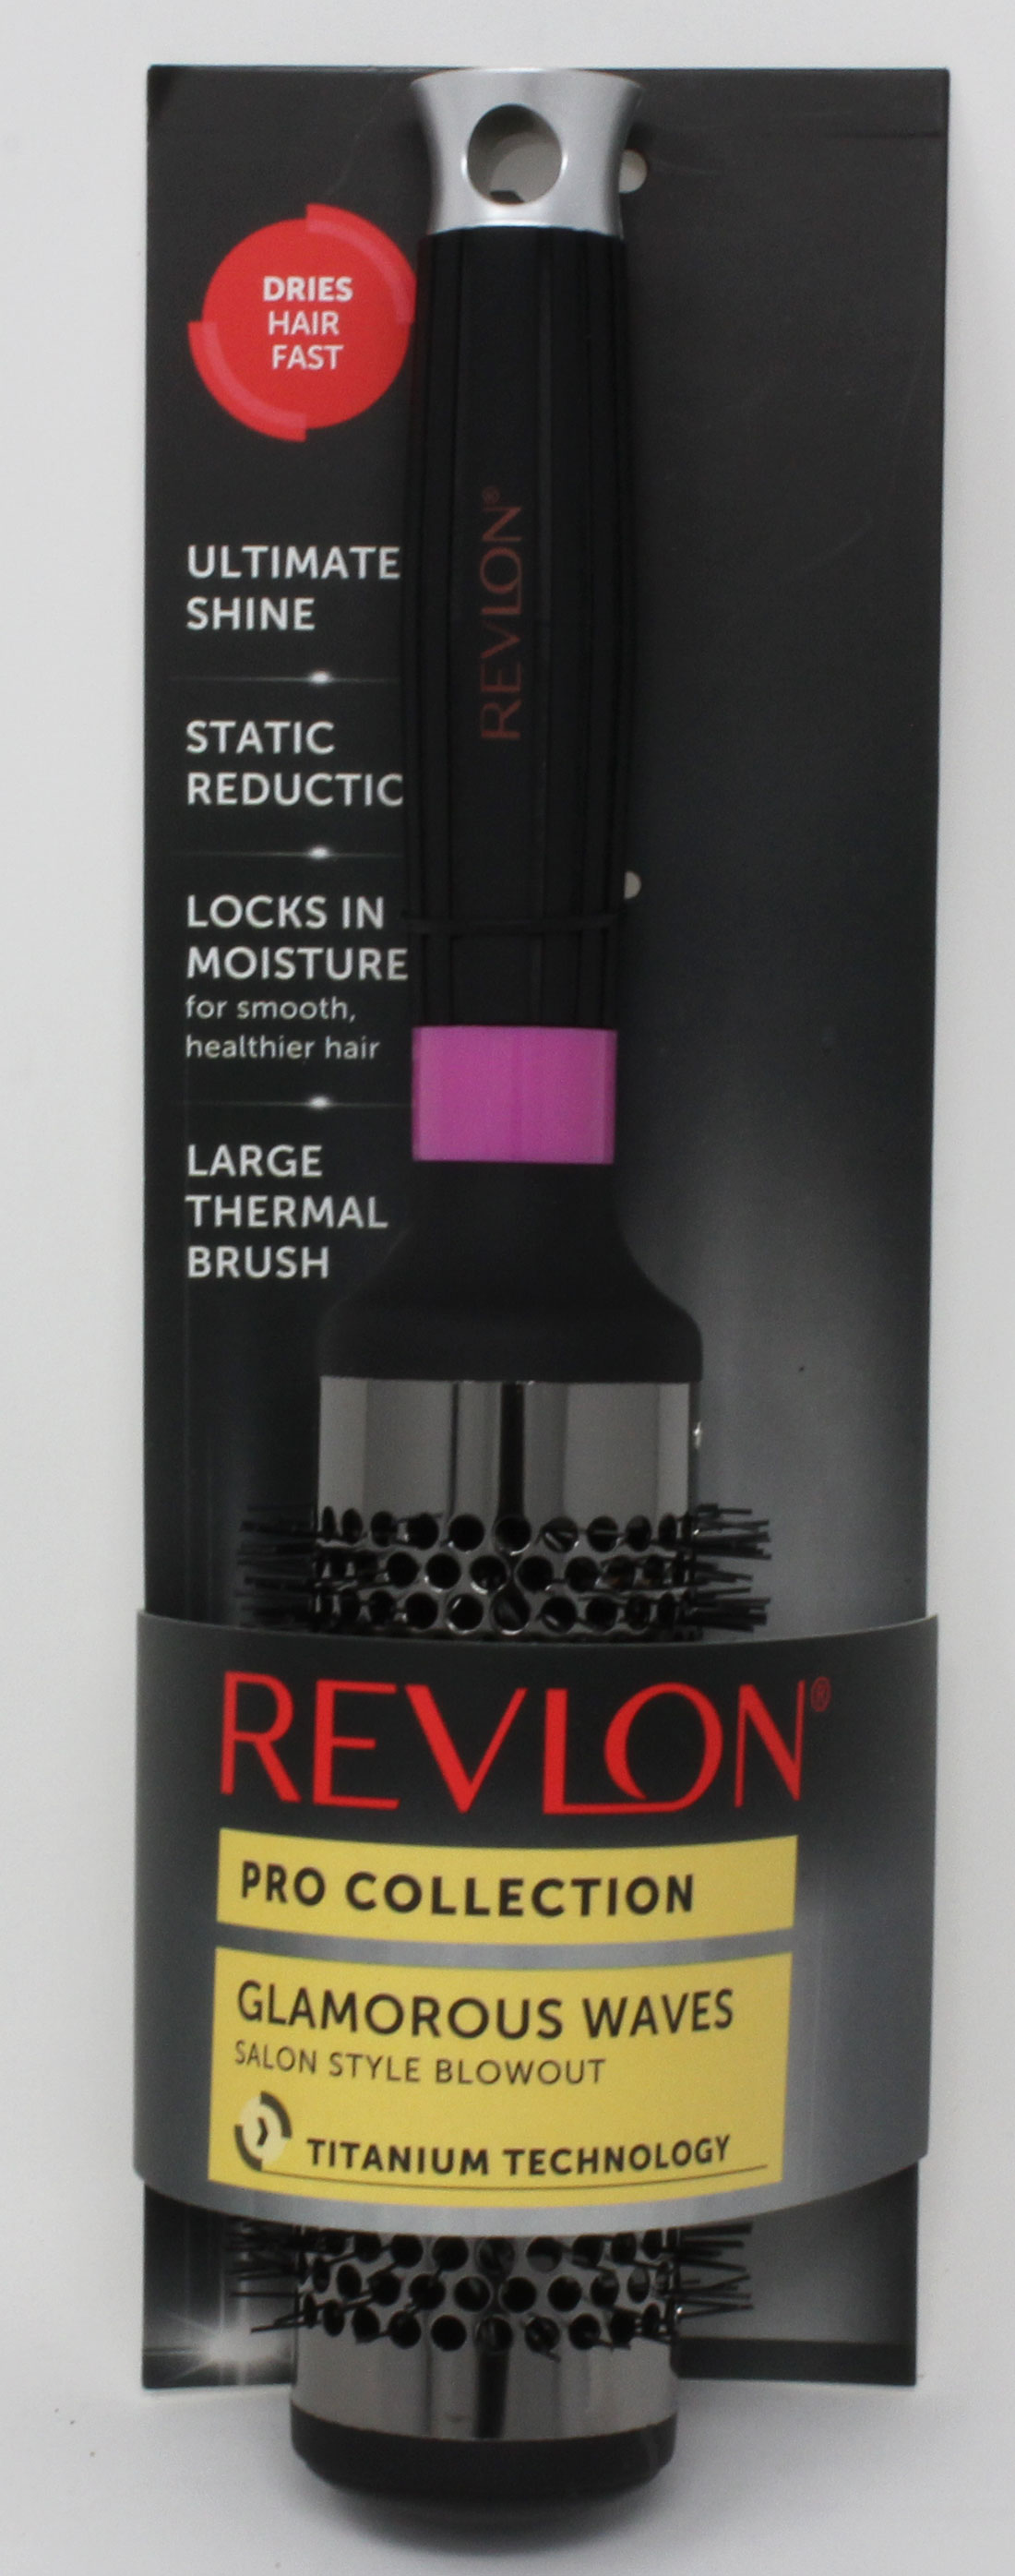 Revlon pro collection glaworous waves slon style blowout large round thermal brush